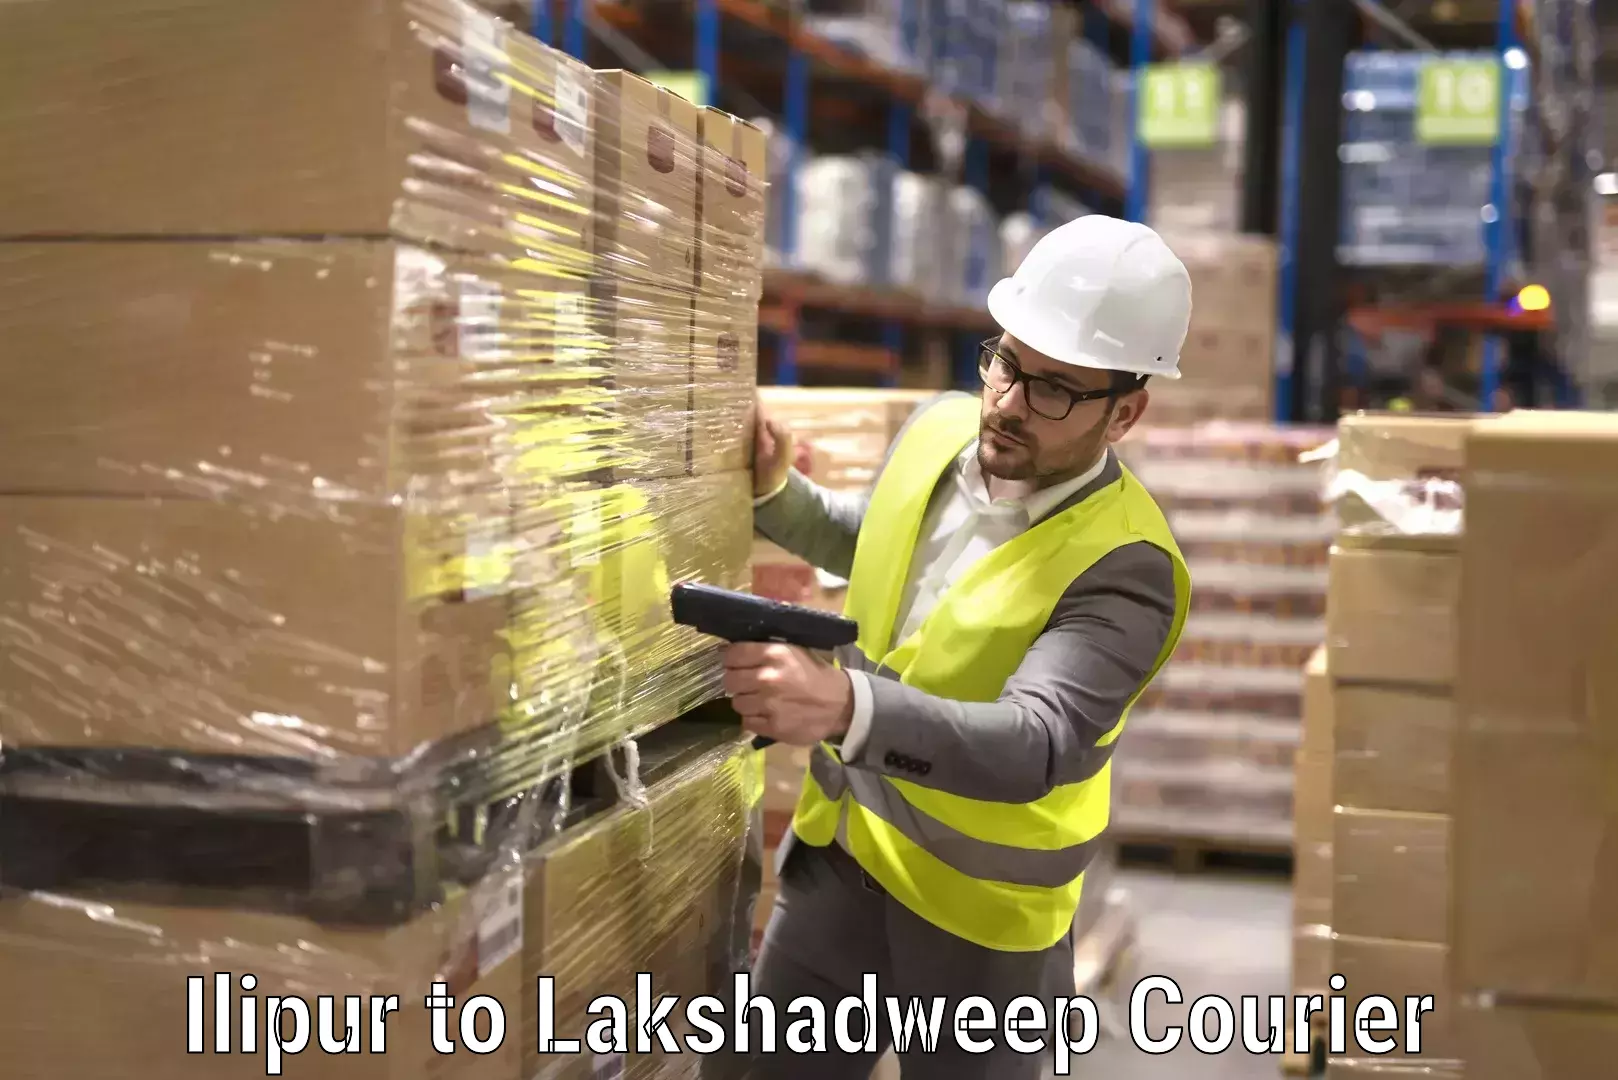 Professional moving company Ilipur to Lakshadweep